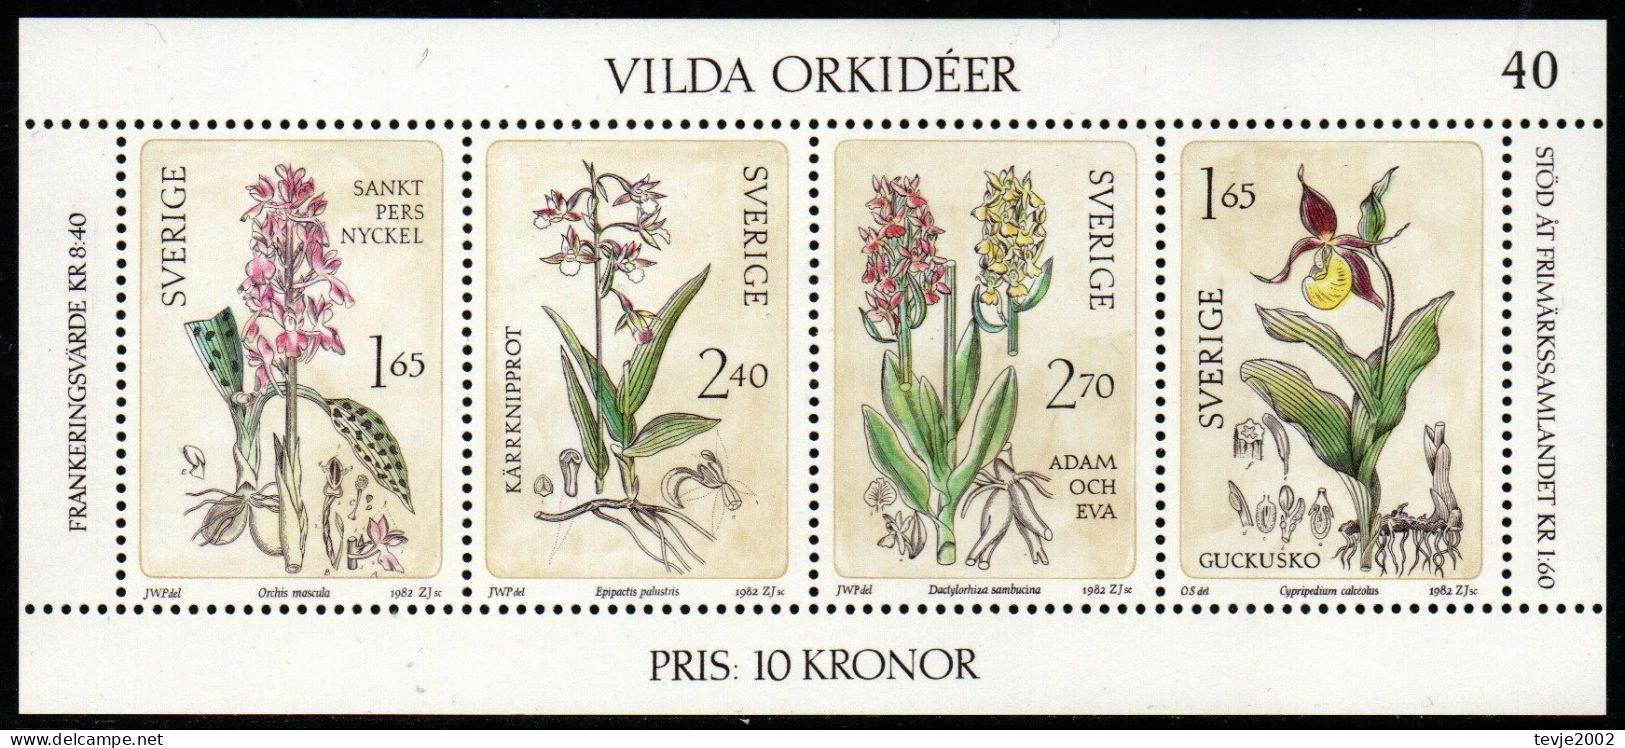 Schweden Sverige 1982 - Mi.Nr. Block 10 - Postfrisch MNH - Blumen Flowers Orchideen Orchids - Orchids